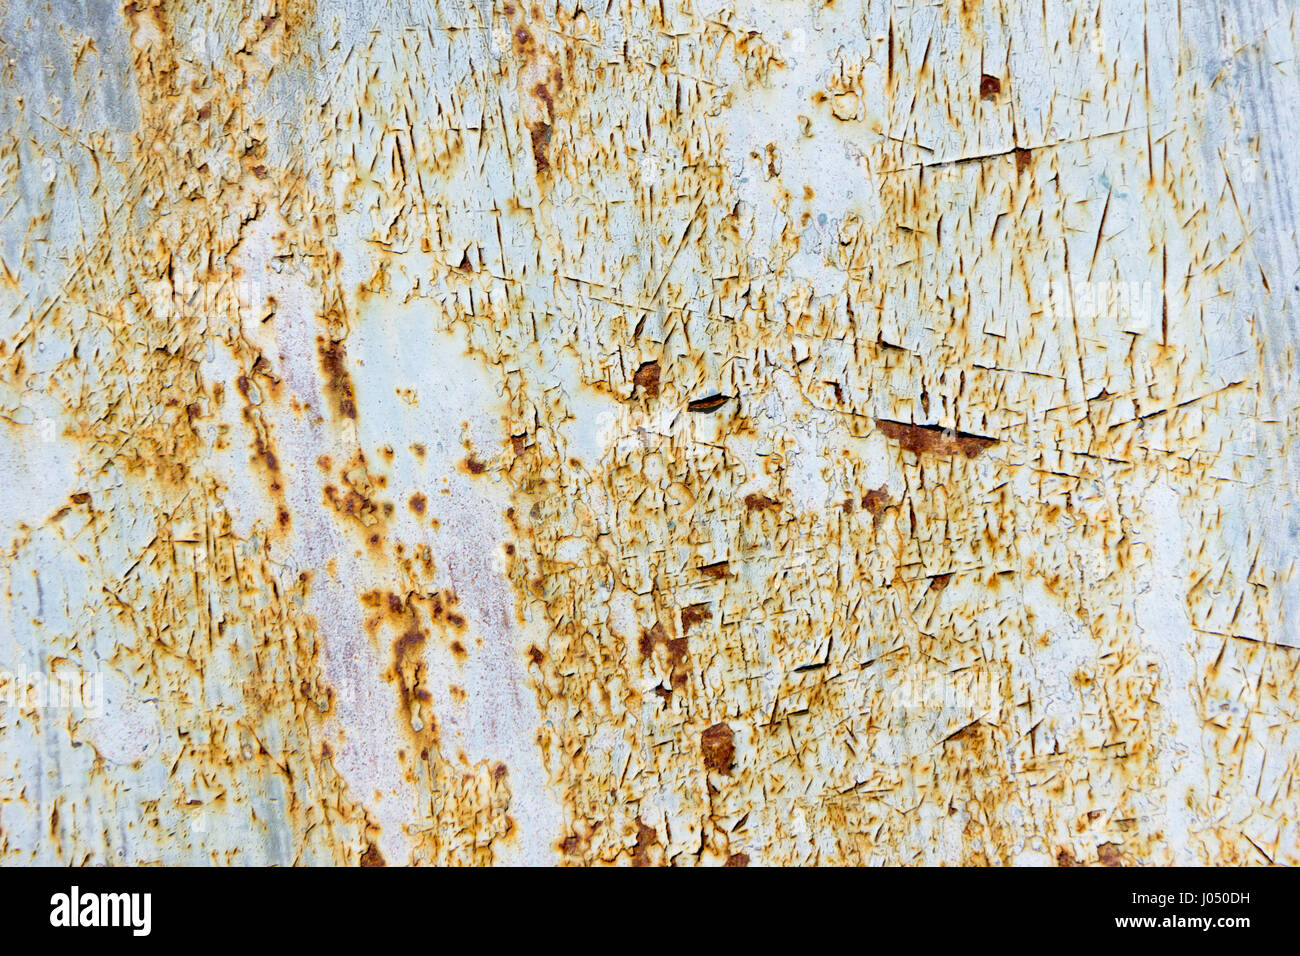 Peeling rusty metal texture Stock Photo